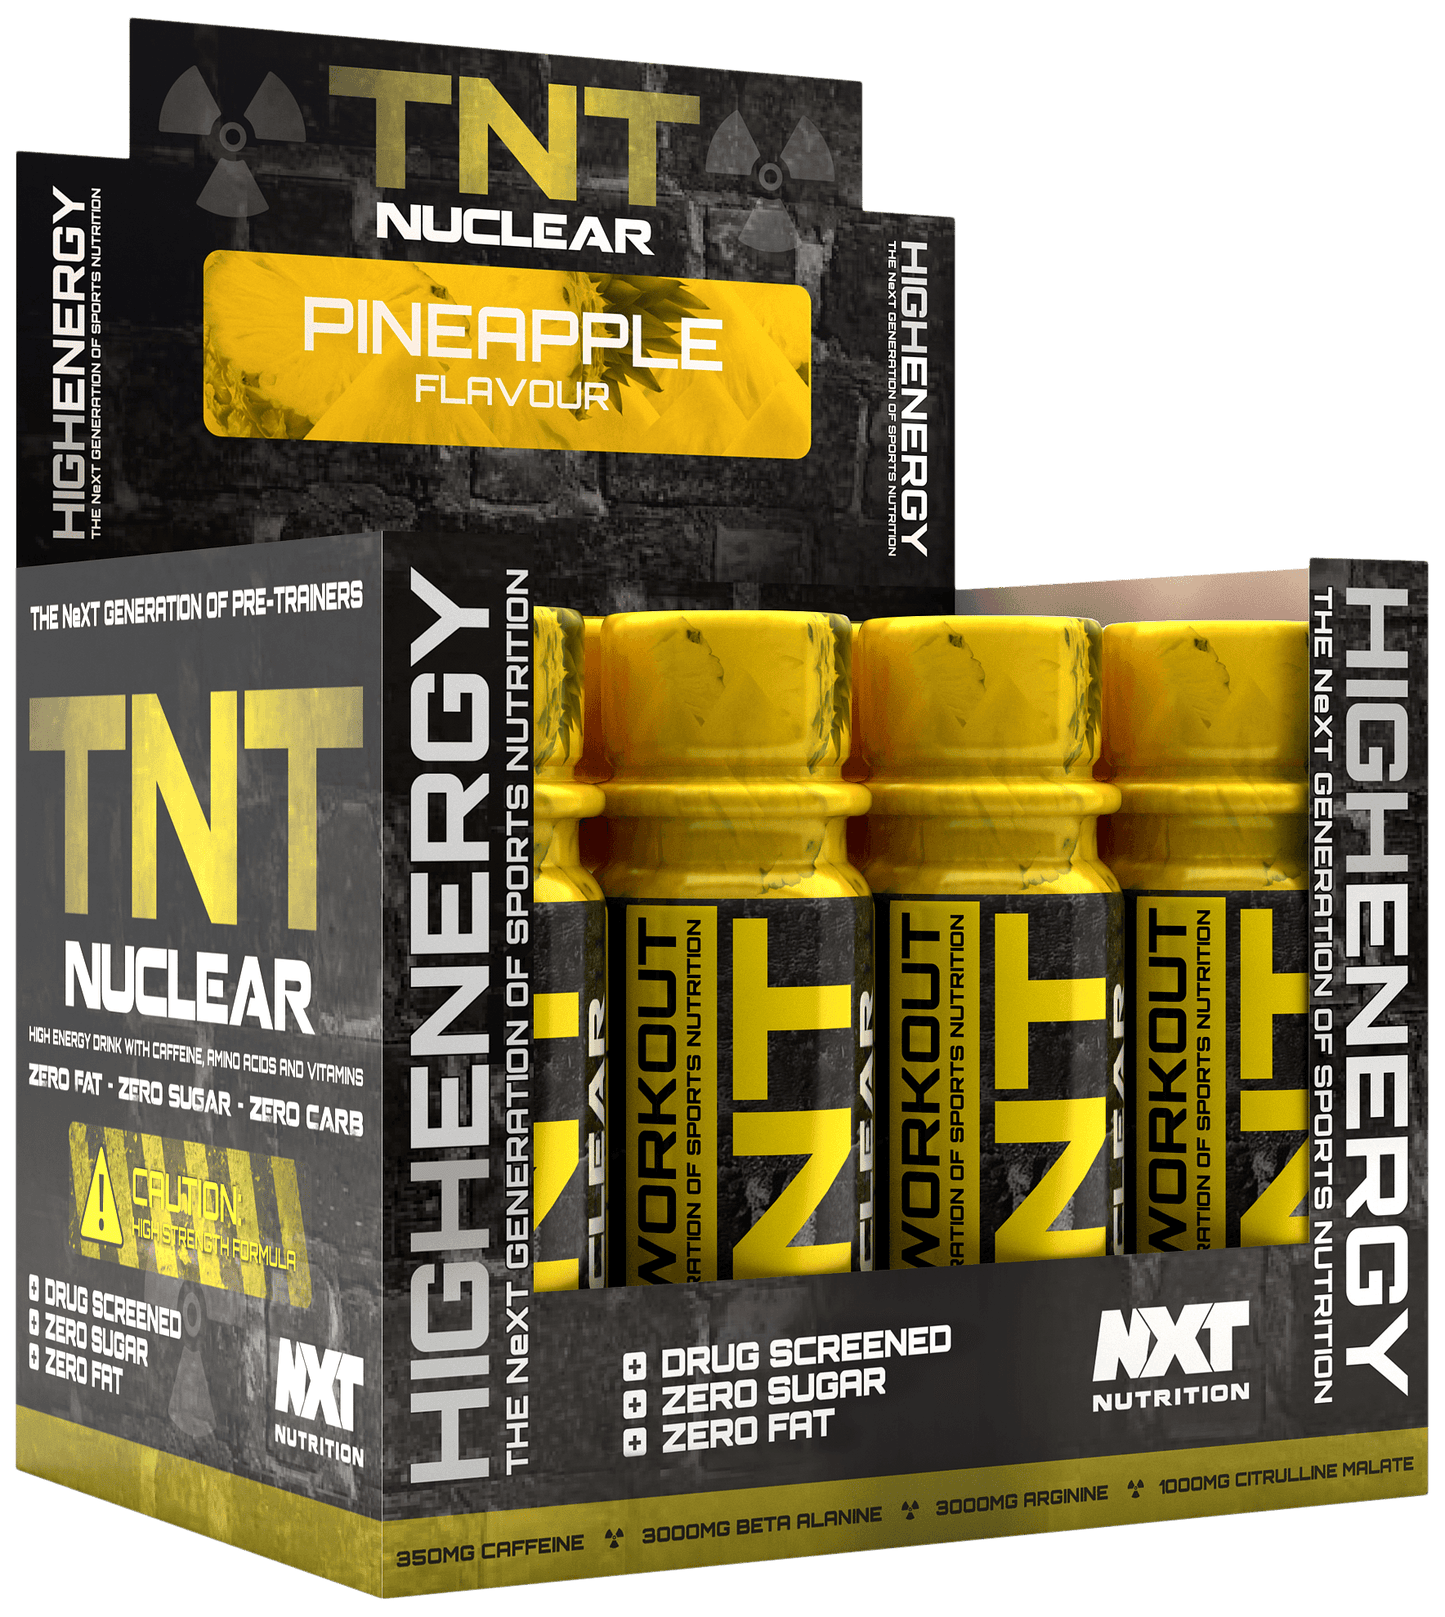 NXT Nutrition TNT Nuclear Shots 12 x 60ml - Fitness Health 